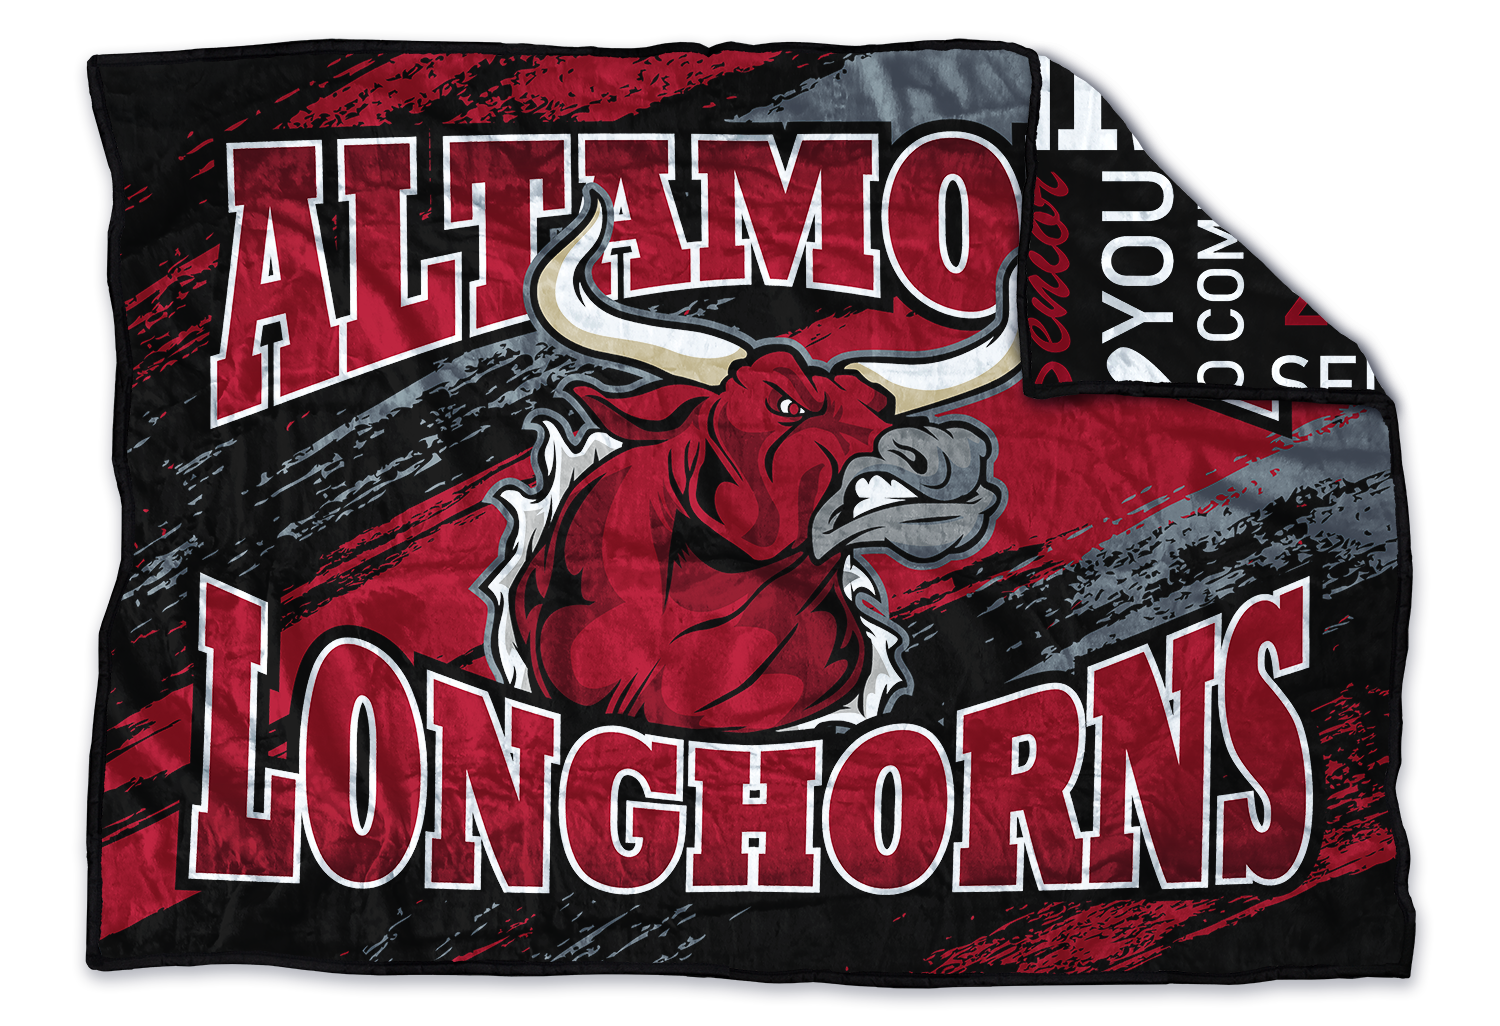 Altamont Longhorns